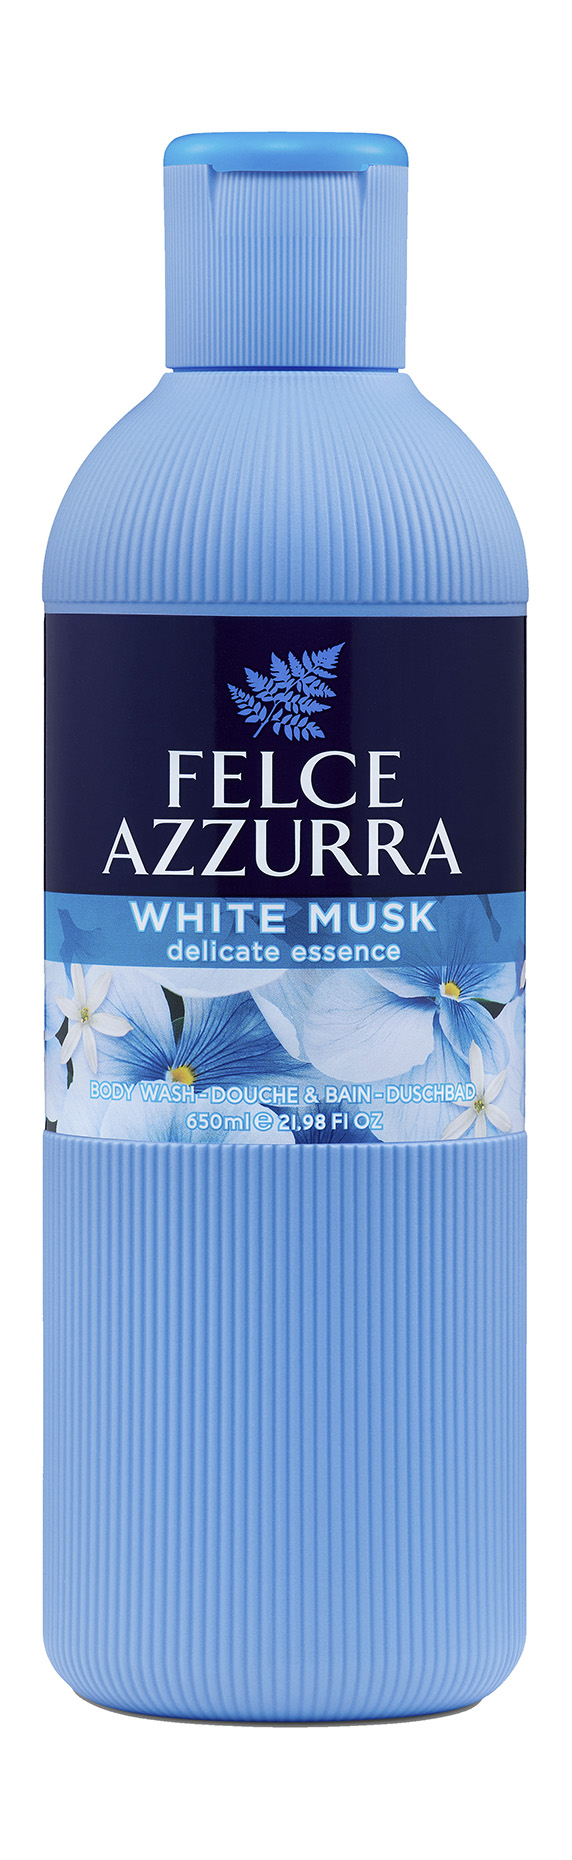 Гель для душа Felce Azzurra White Musk Delicate Essence парфюмированный, 650 мл dr seed гель для душа с ароматом белого мускуса moisture bodywash bebe musk